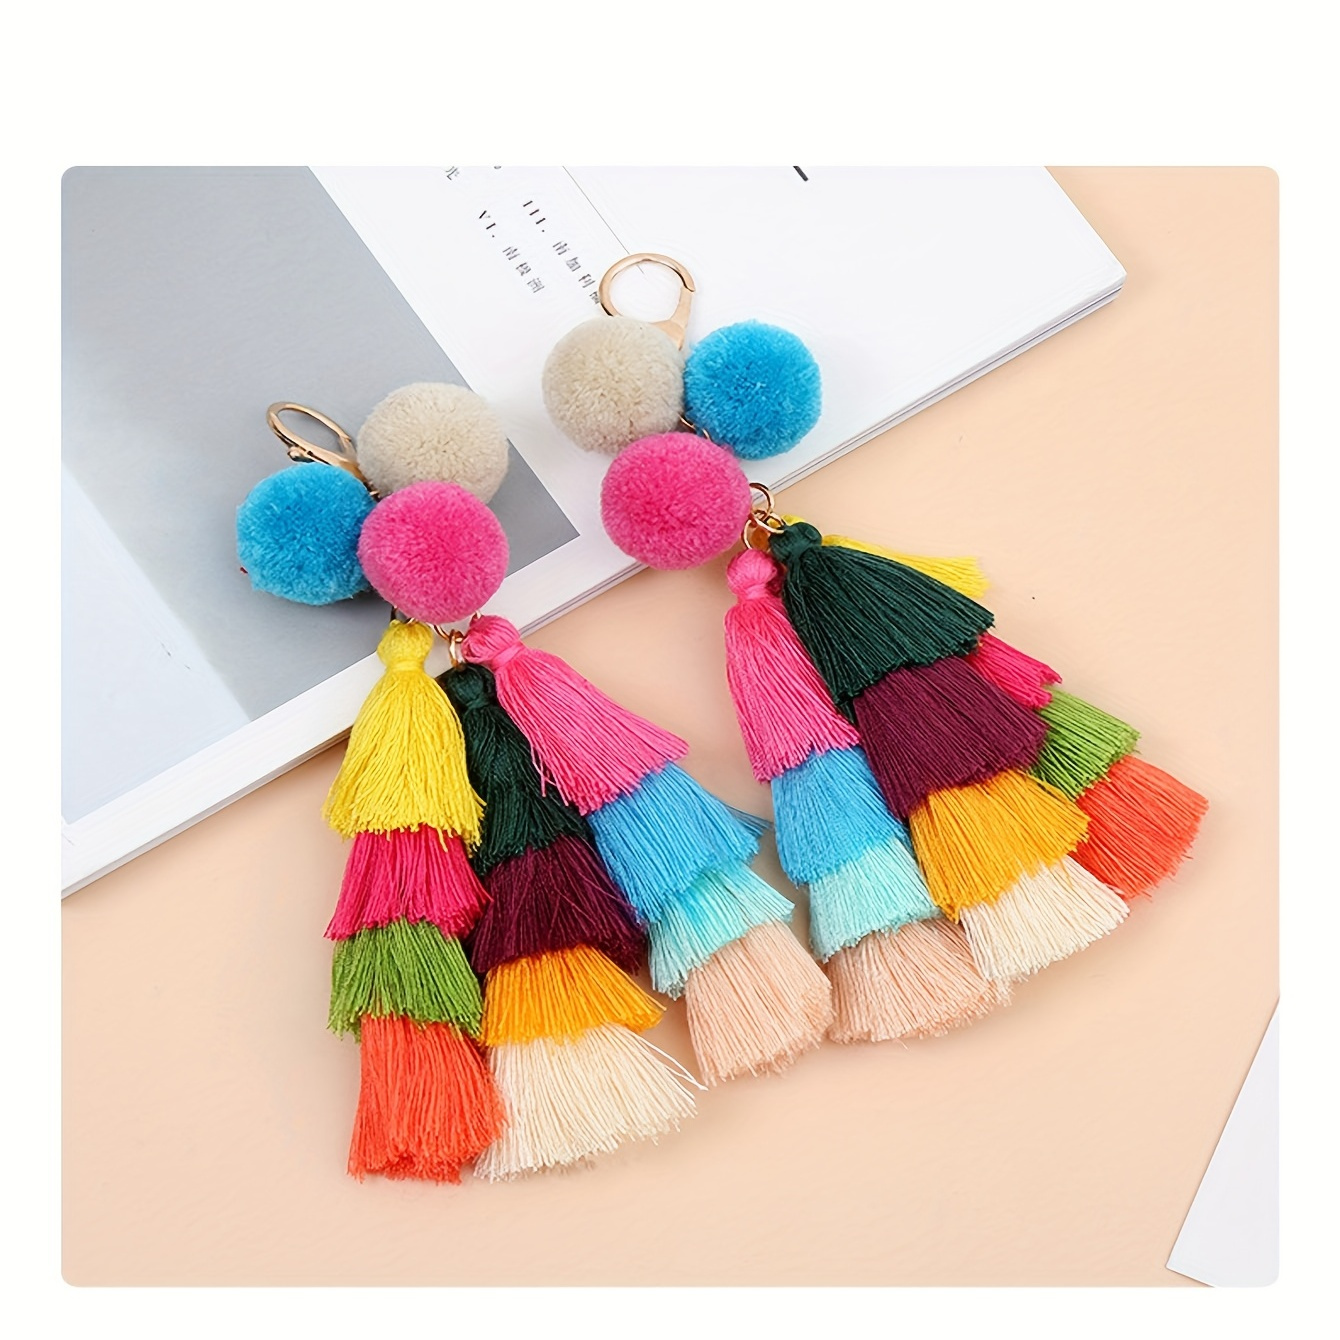 

Handmade Woven Rainbow Tassel Macrame Keychain Pendant Fashion Vintage Car Keyring Ornament Bag Purse Charm Accessories (random Color)